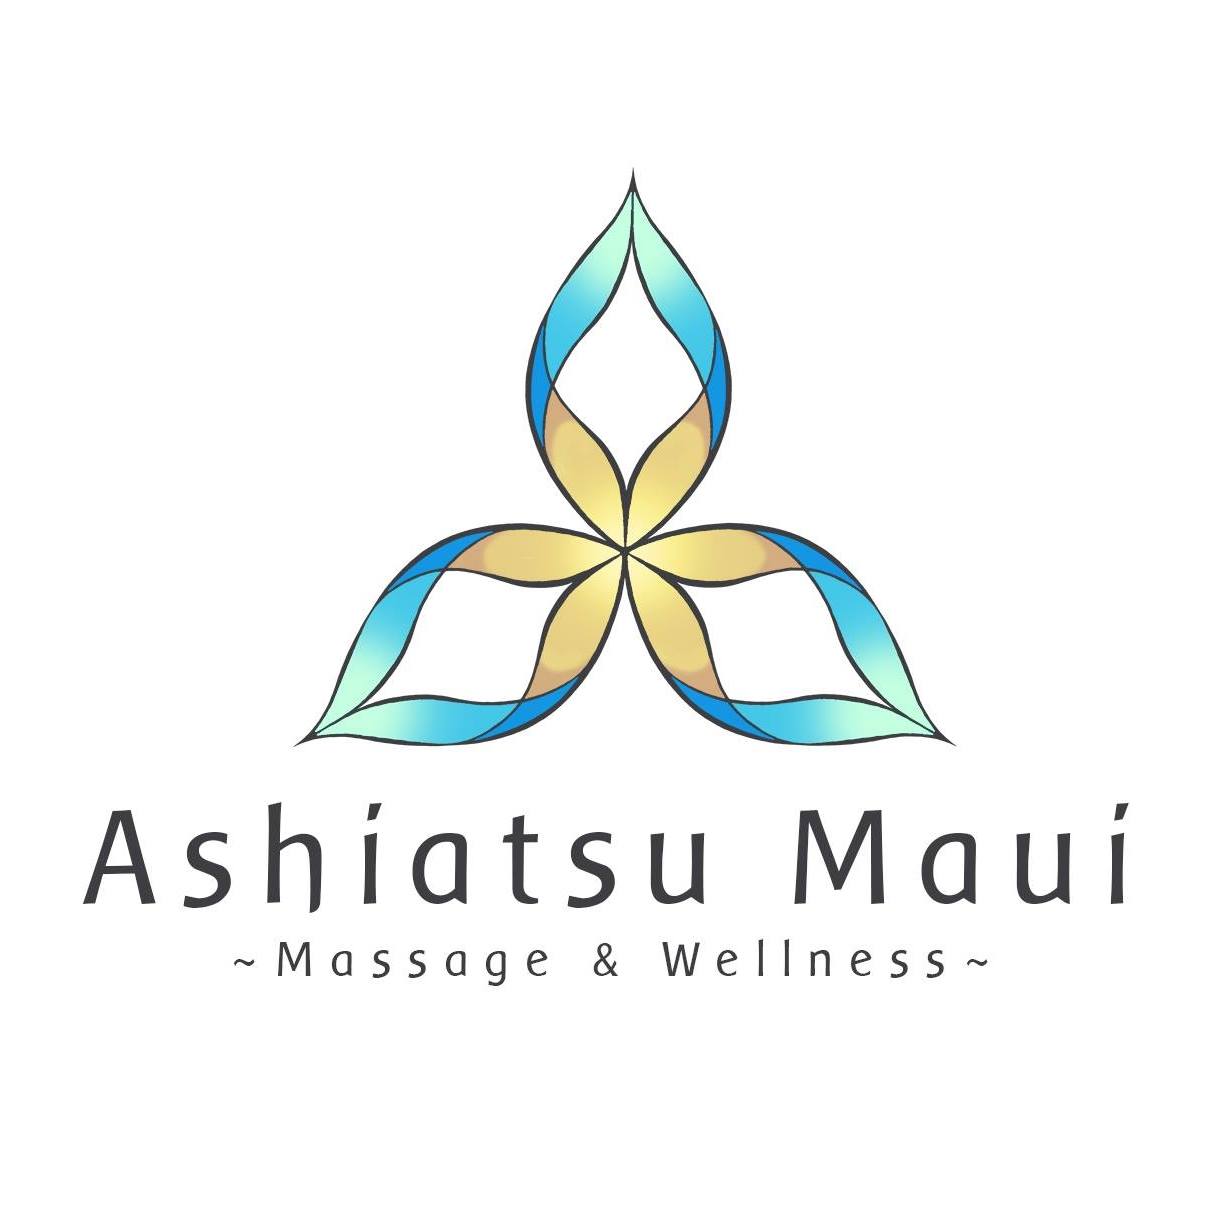 Ashiatsu Maui Massage & Wellness logo